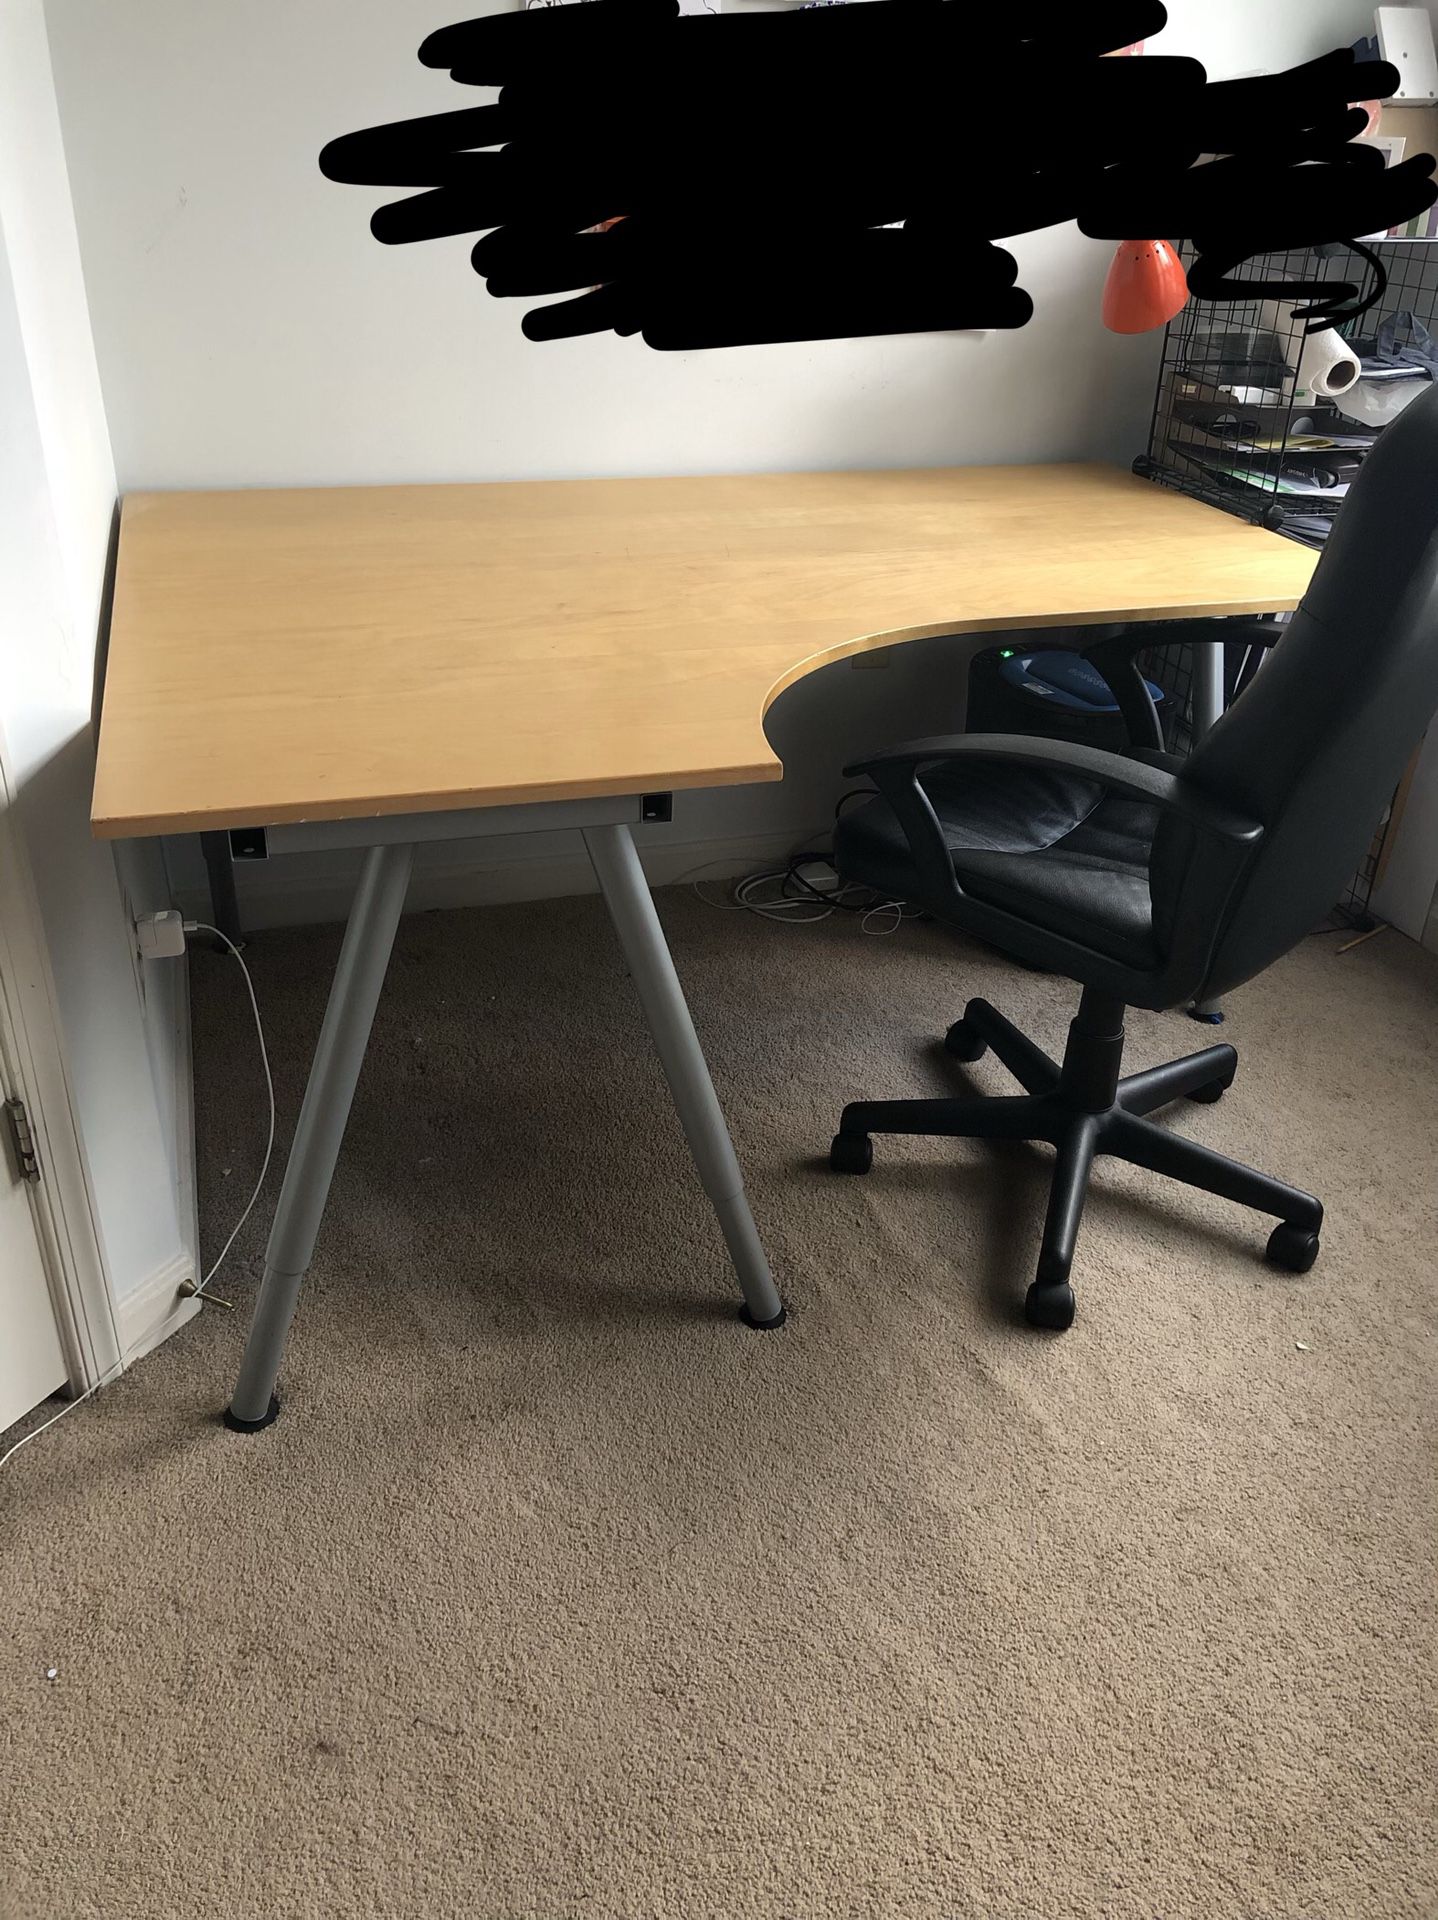 IKEA corner desk and chair